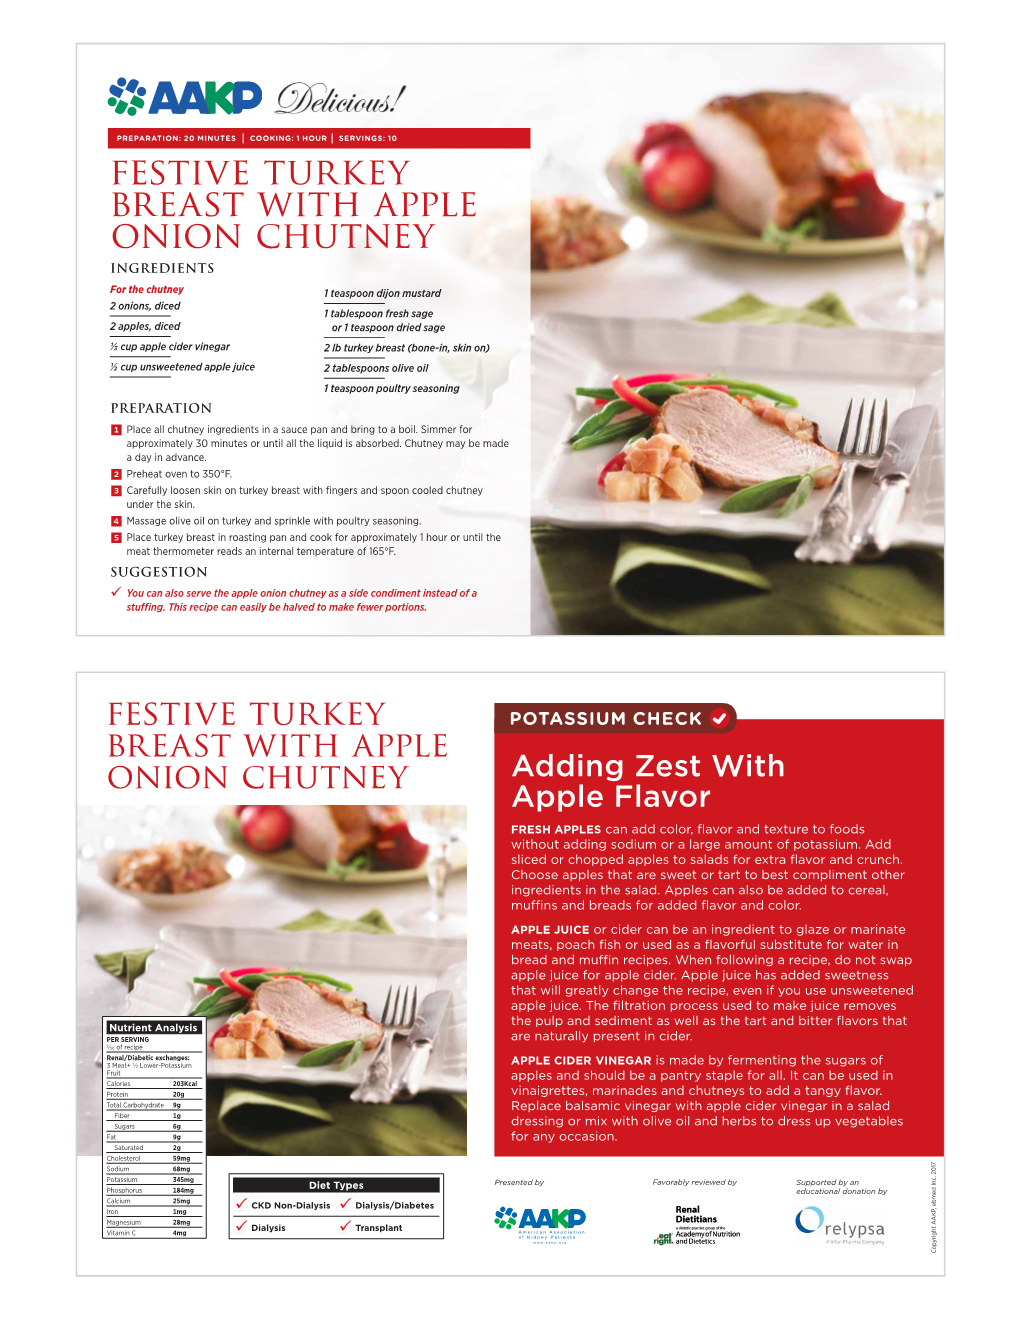 Festive Turkey Breast with Apple Onion Chutney INGREDIENTS